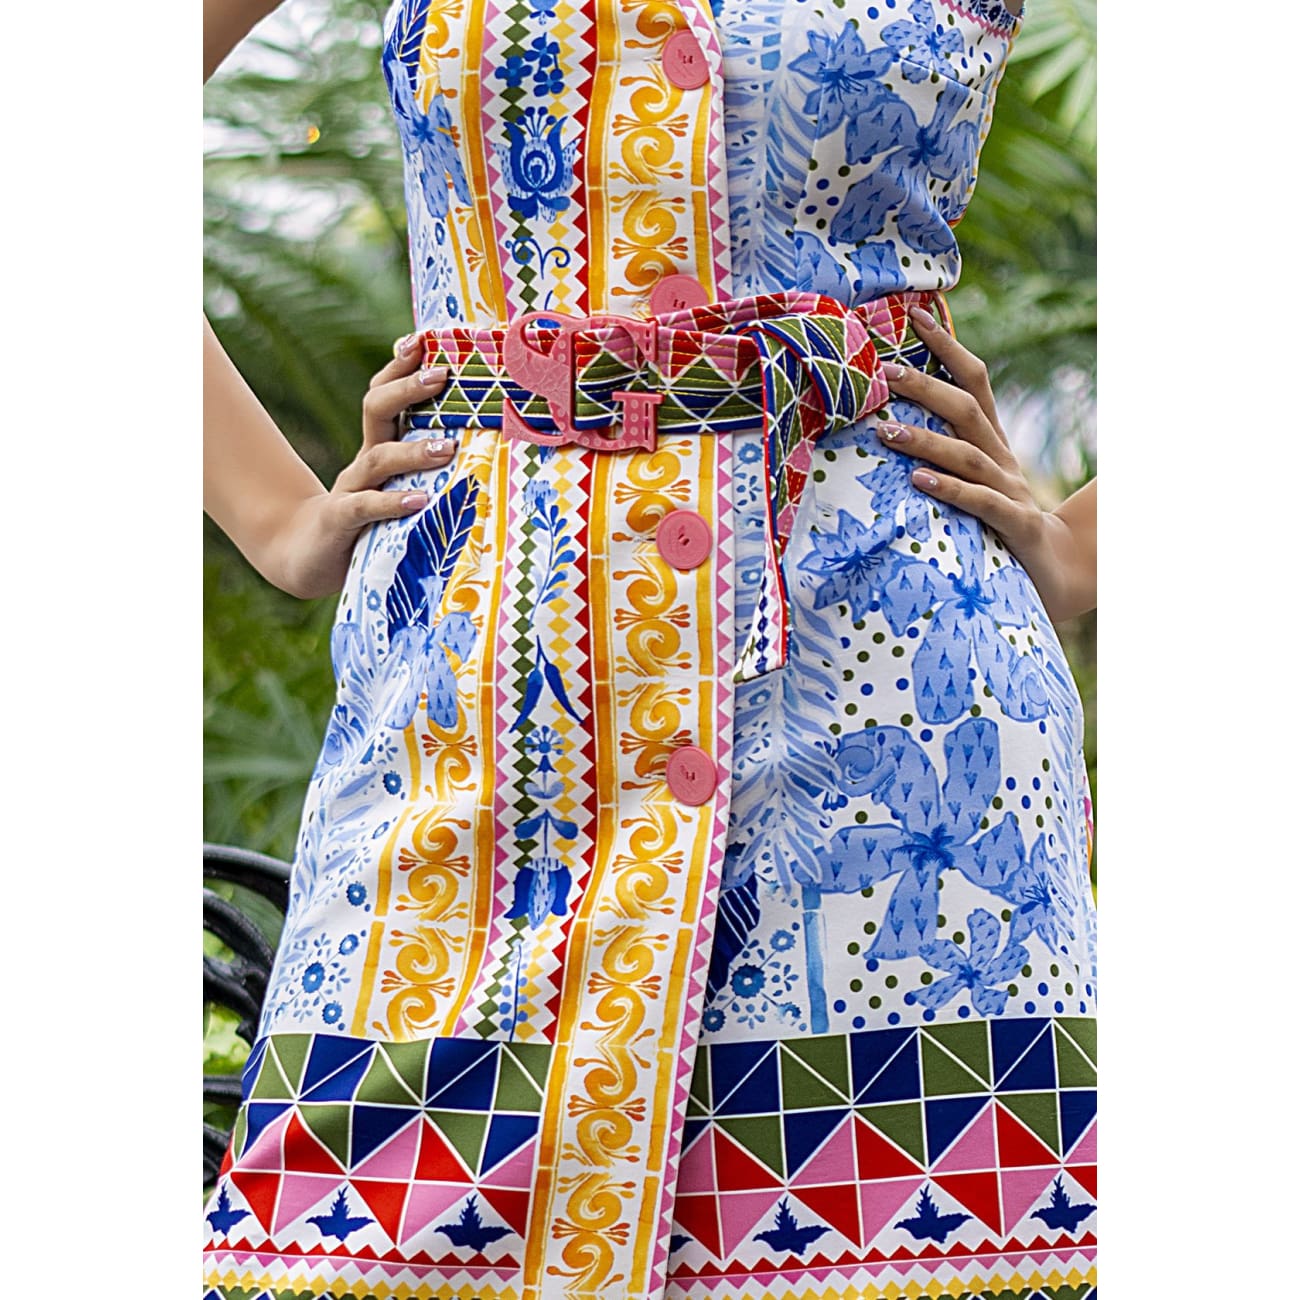 Frida Yellow Jacket Dress Dresses Sandhya Garg Free Shipping beach dress Boho Chic cruise dress Designer dress Dress for vacation